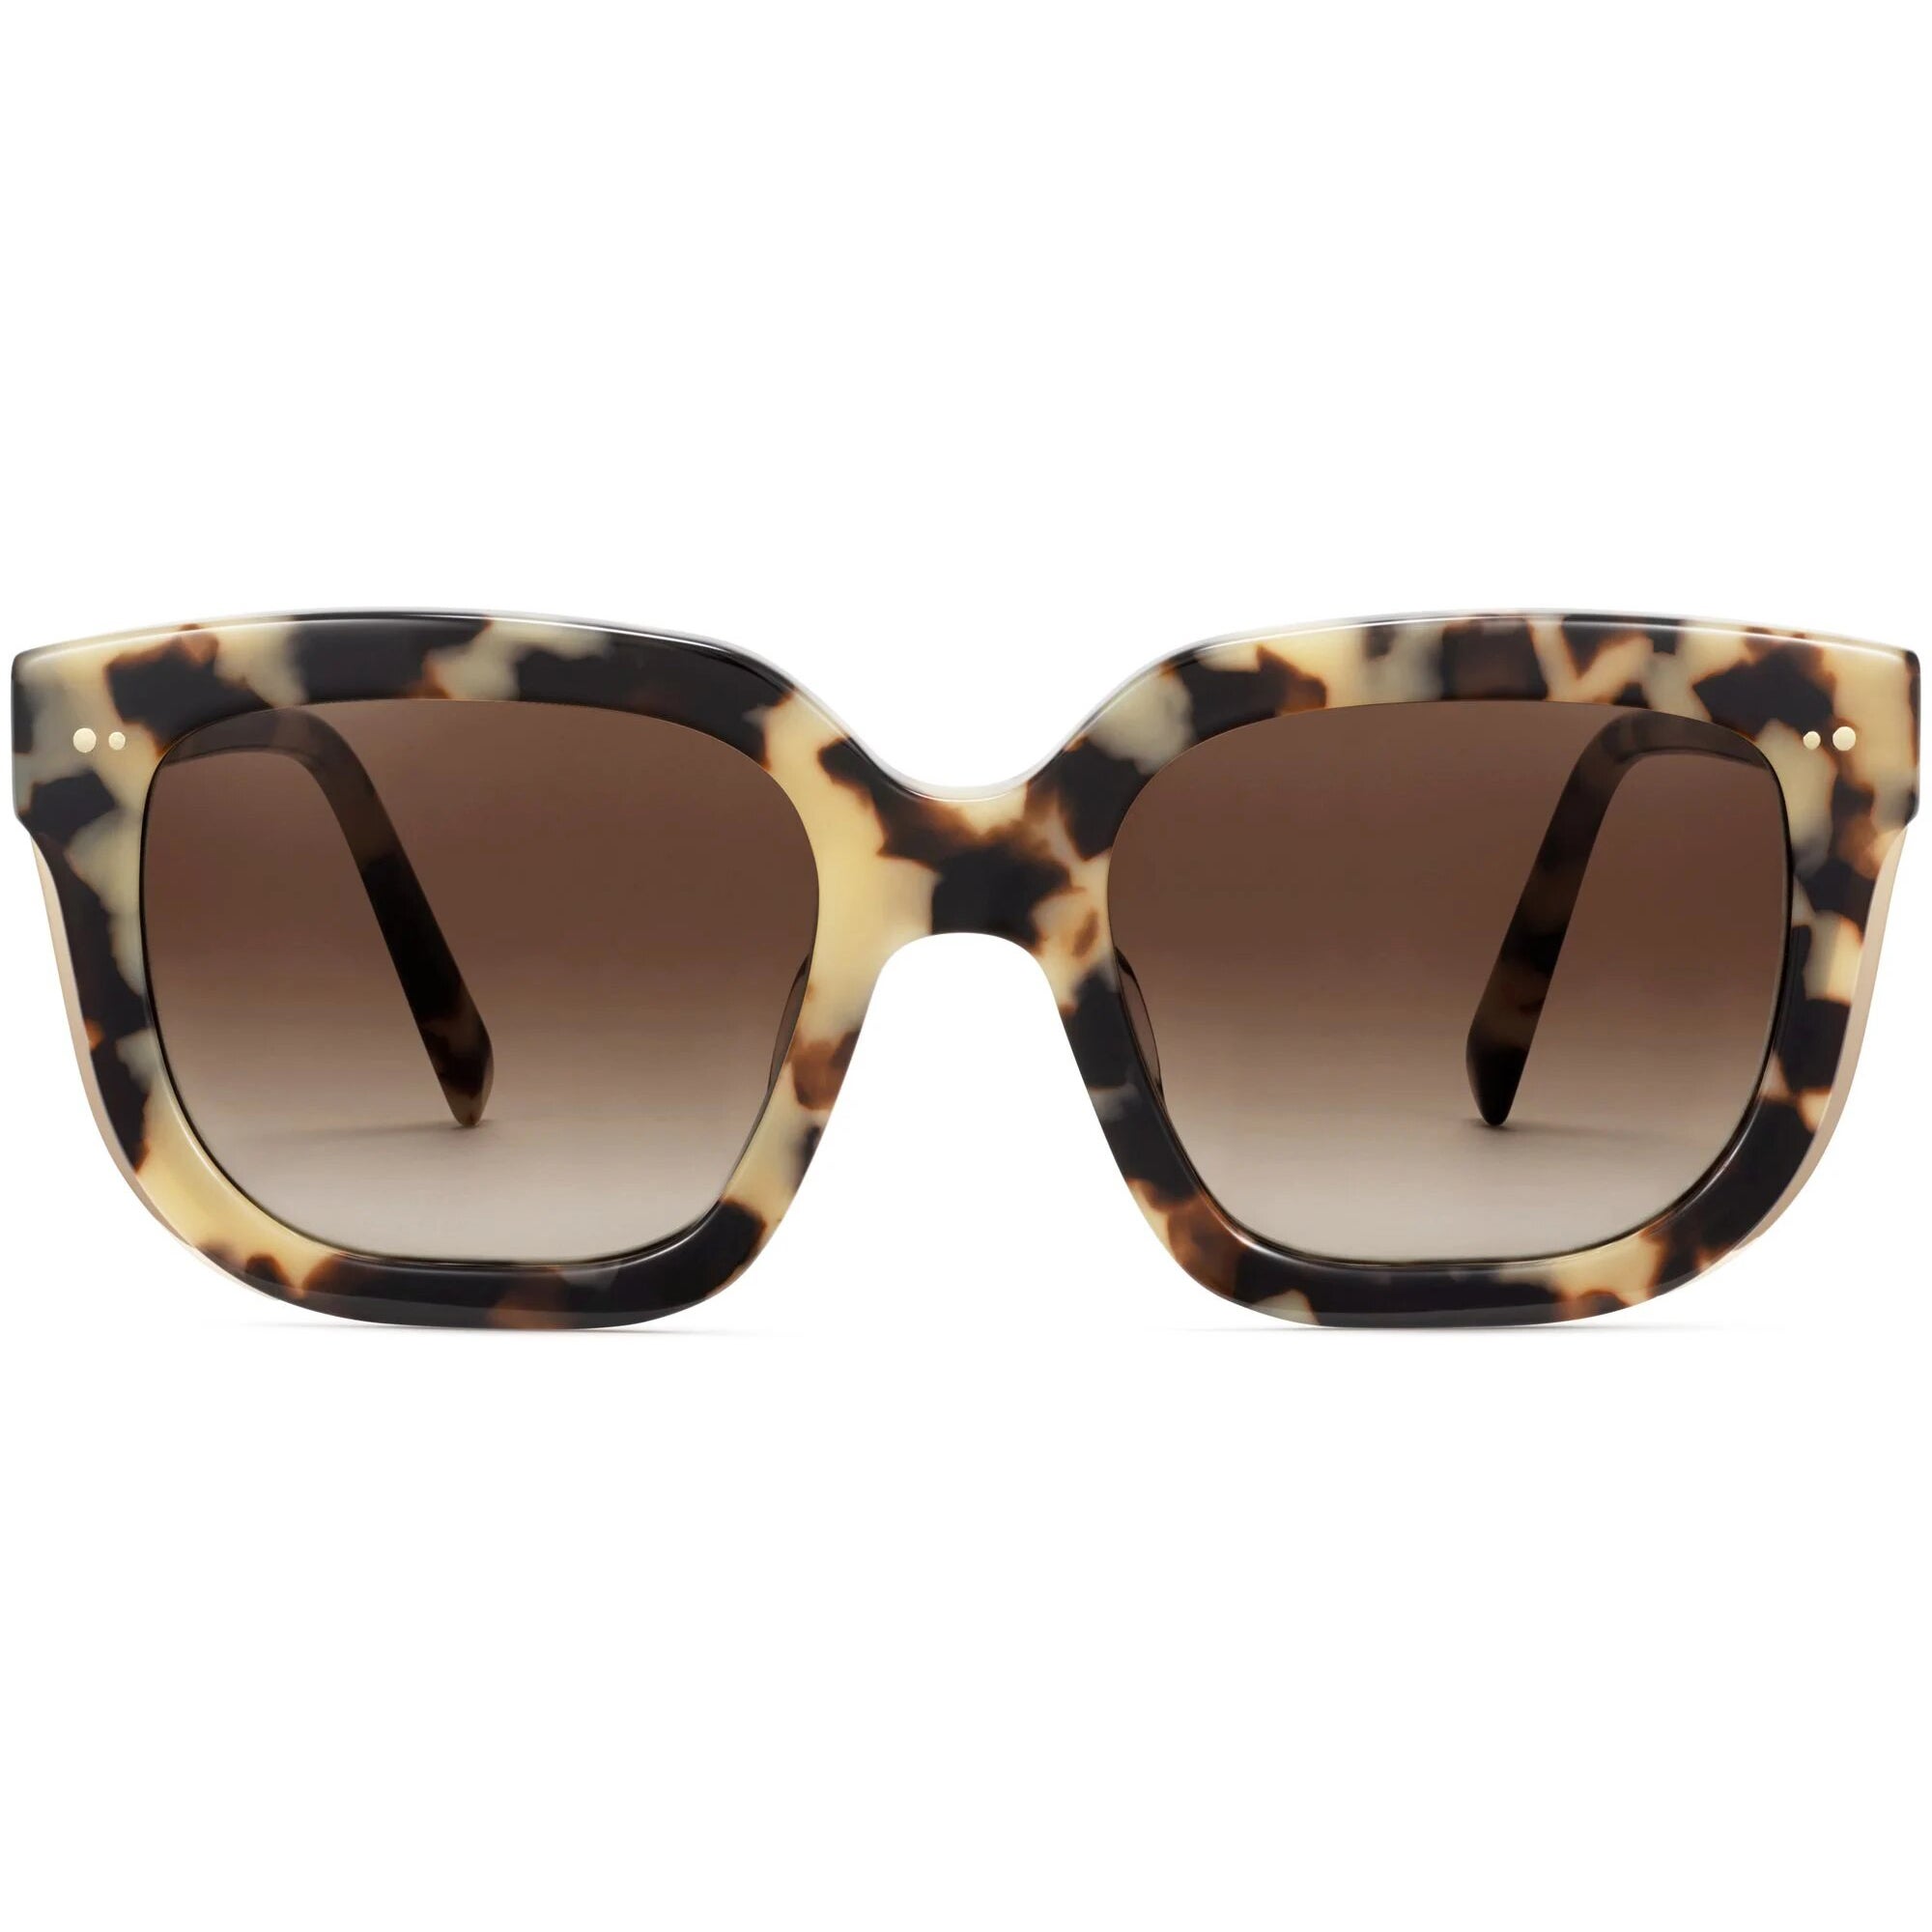 Warby Parker Sunburst Sunglasses Collection Review 2021